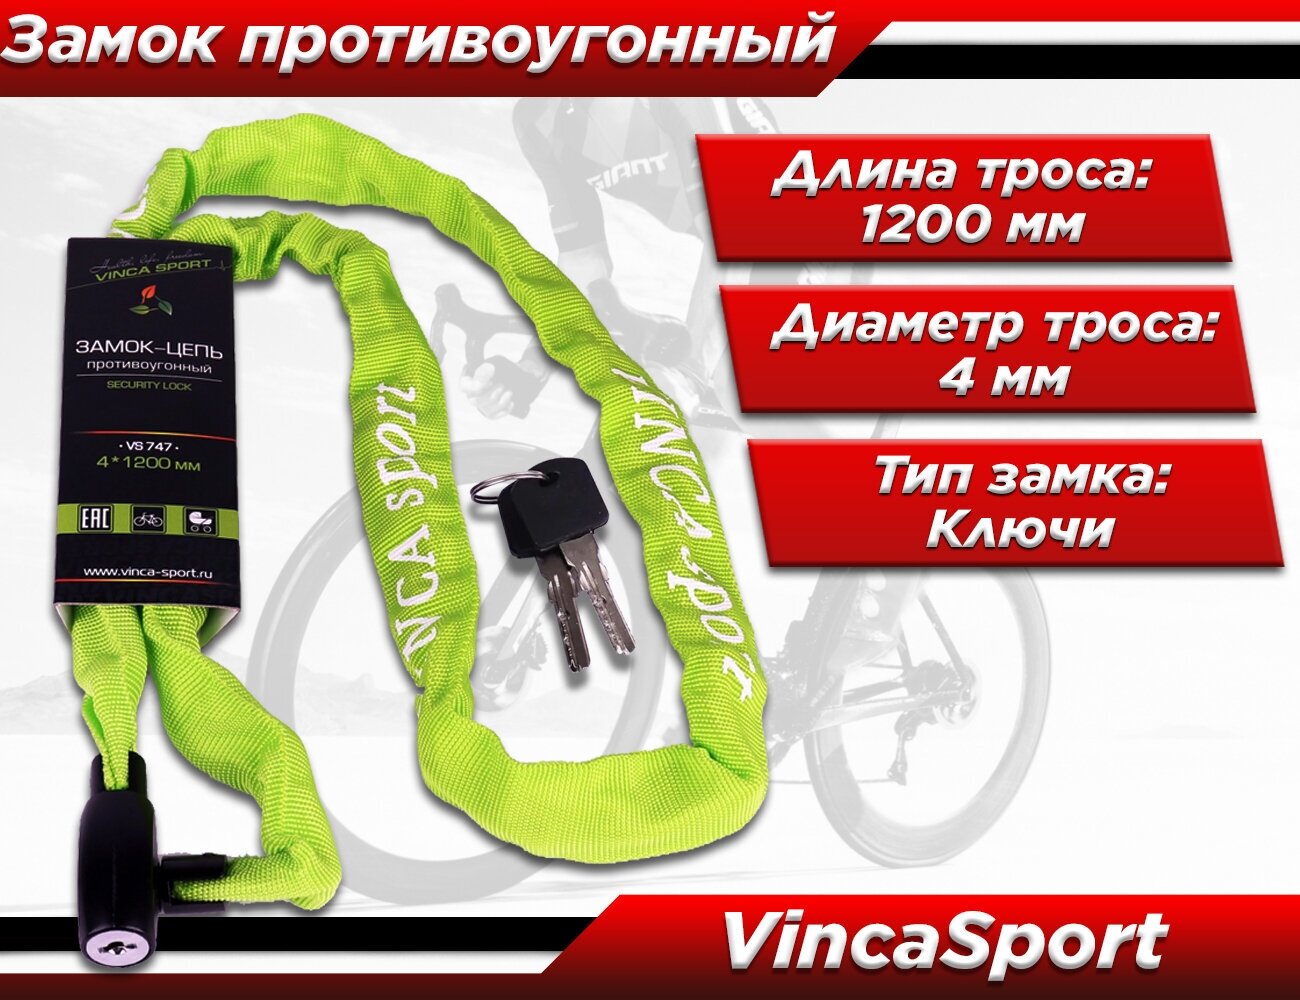 Велозамок-цепь Vinca Sport VS 747 под ключ Green/Black